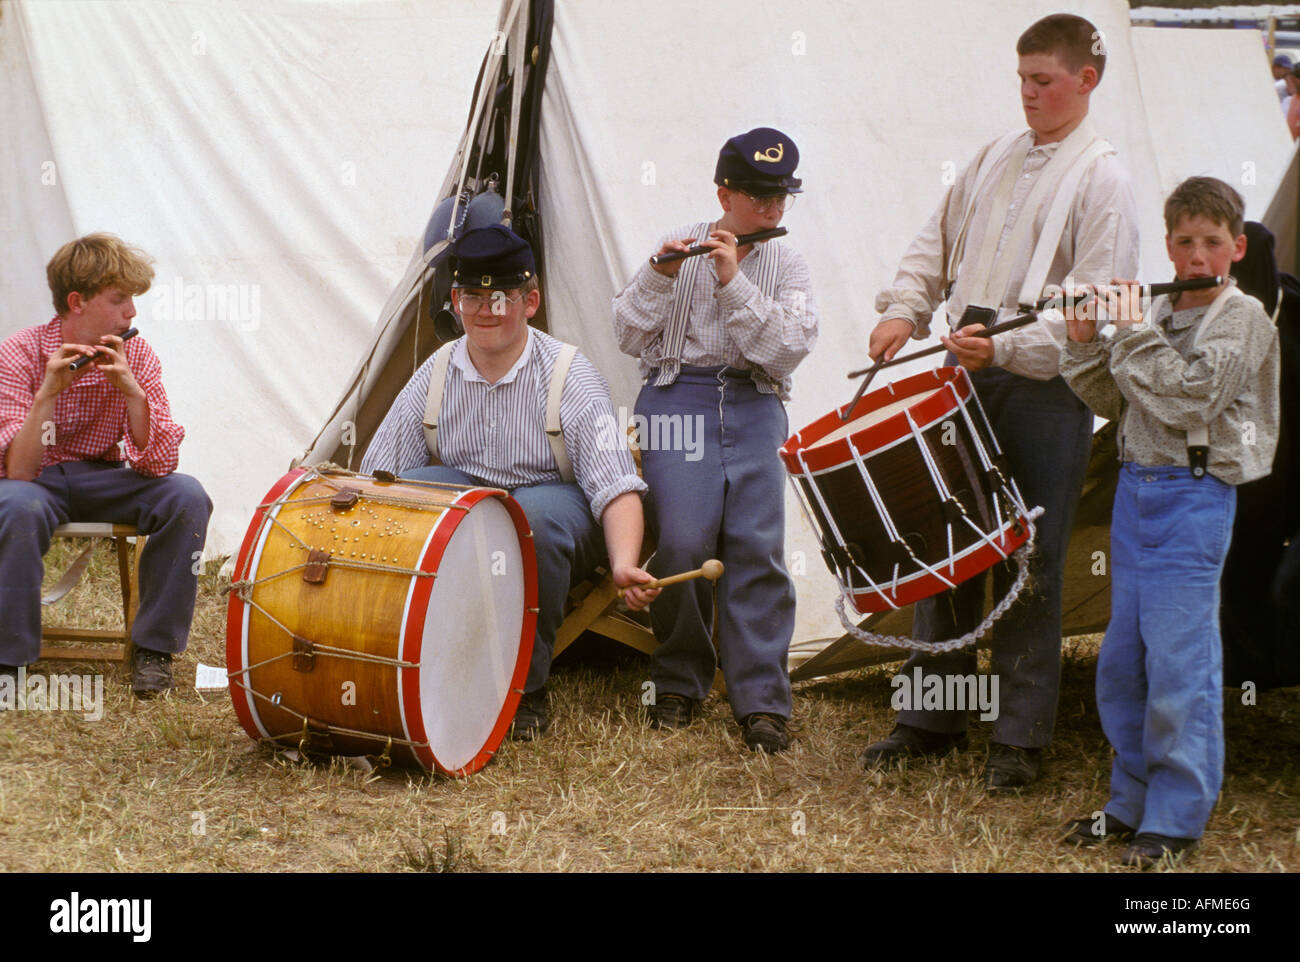 civil war reenactors Gettysburg PA battle field group of children musicians  music musical fife drums tent Stock Photo - Alamy